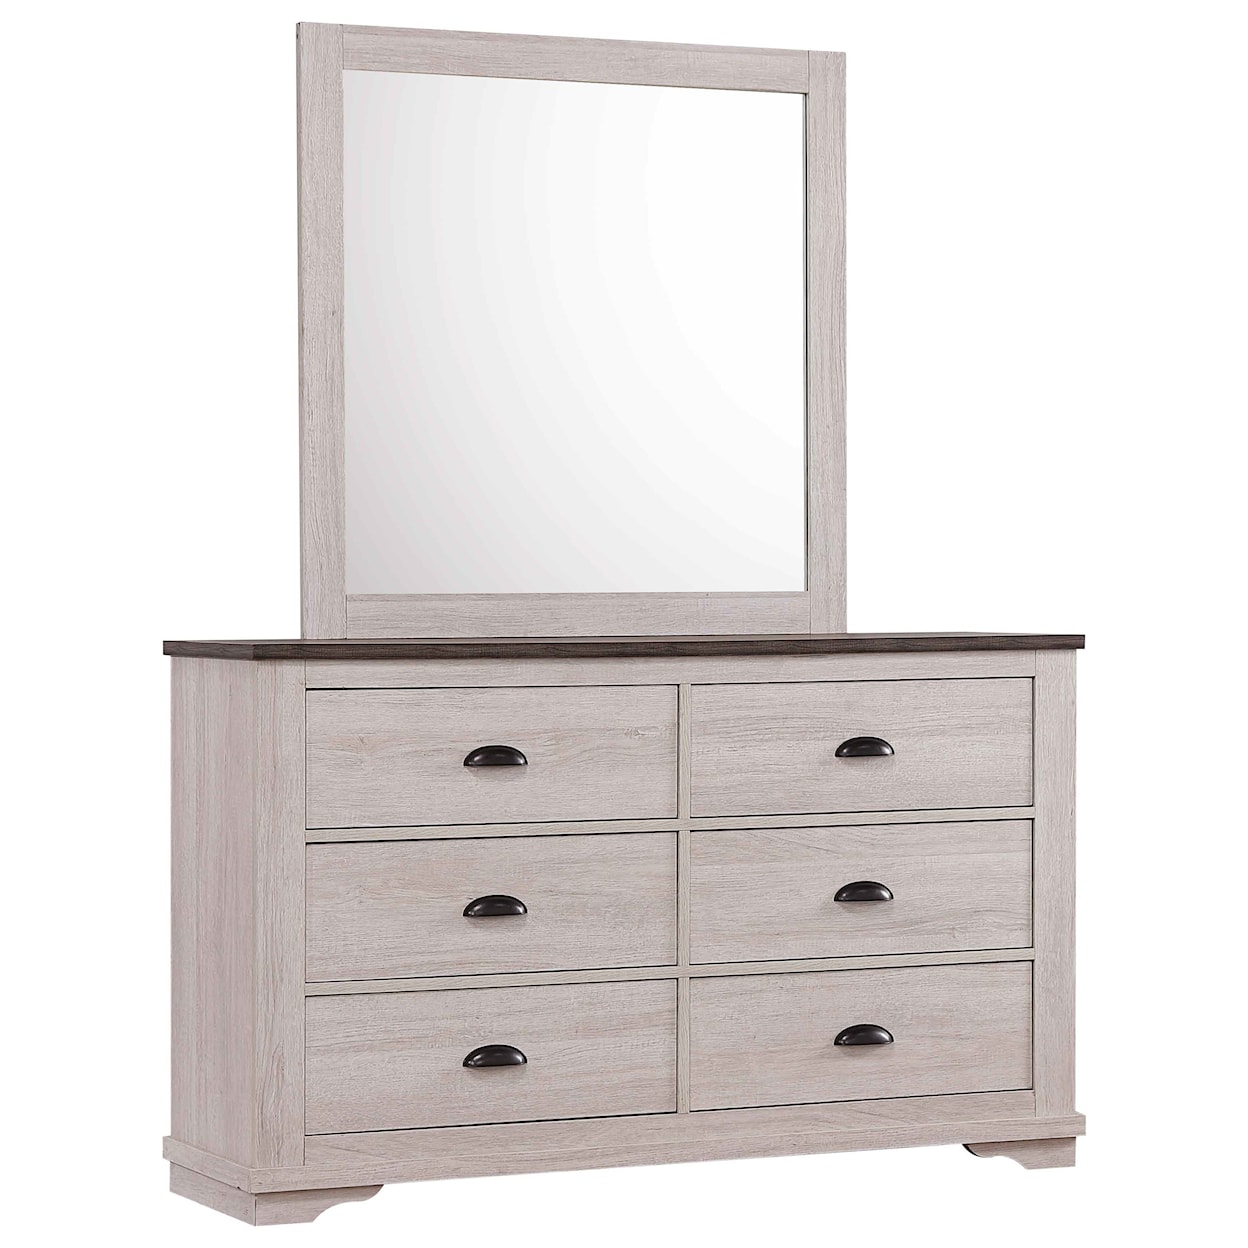 CM Coralee Dresser and Mirror